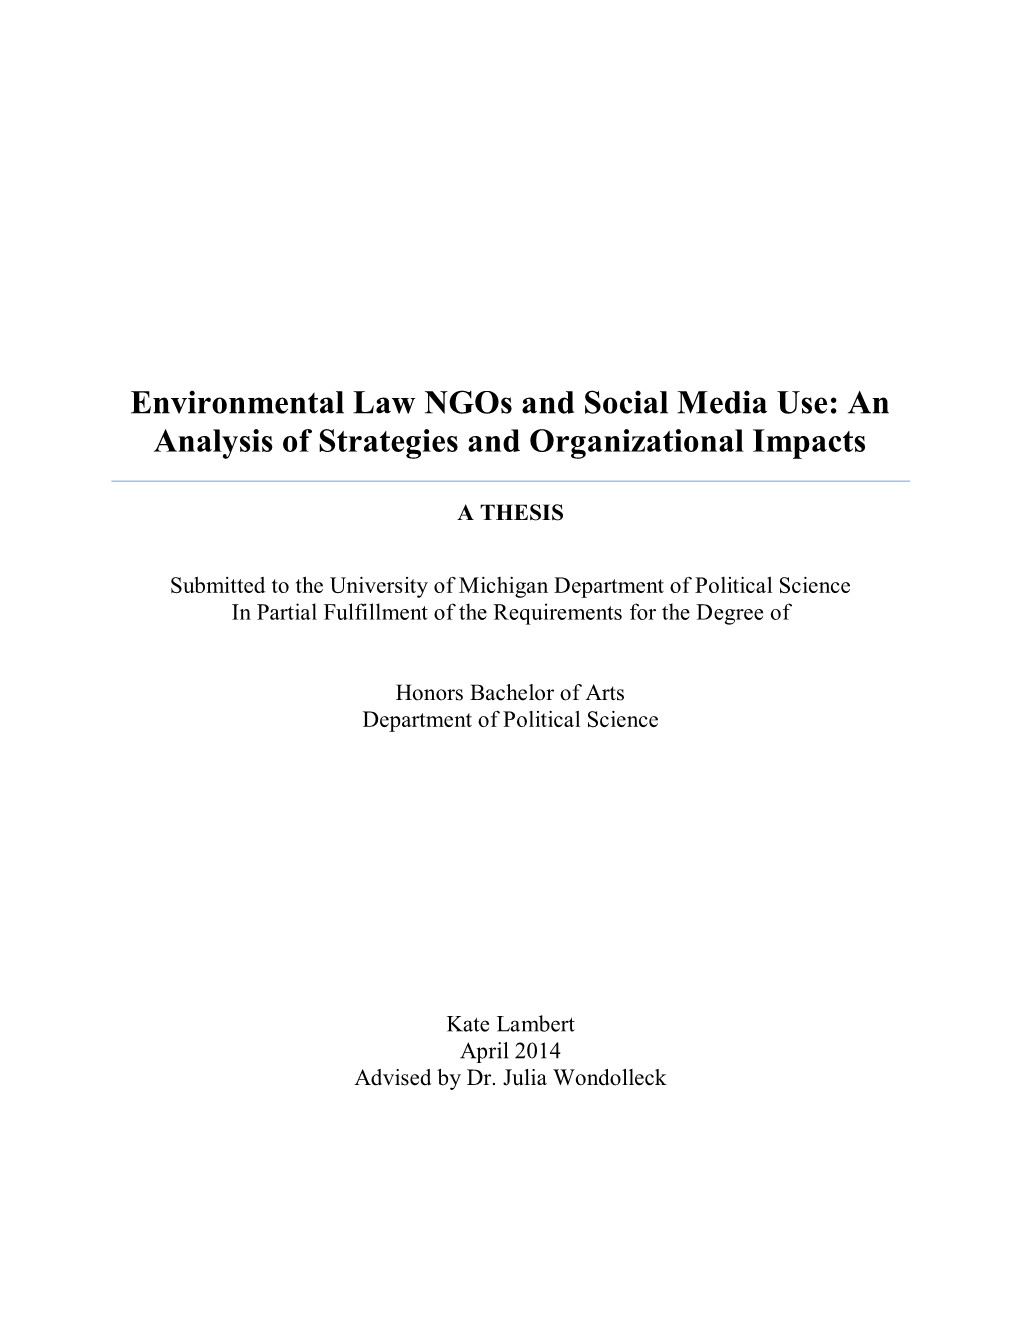 Environmental Law Ngos and Social Media Use: an Analysis of Strategies and Organizational Impacts